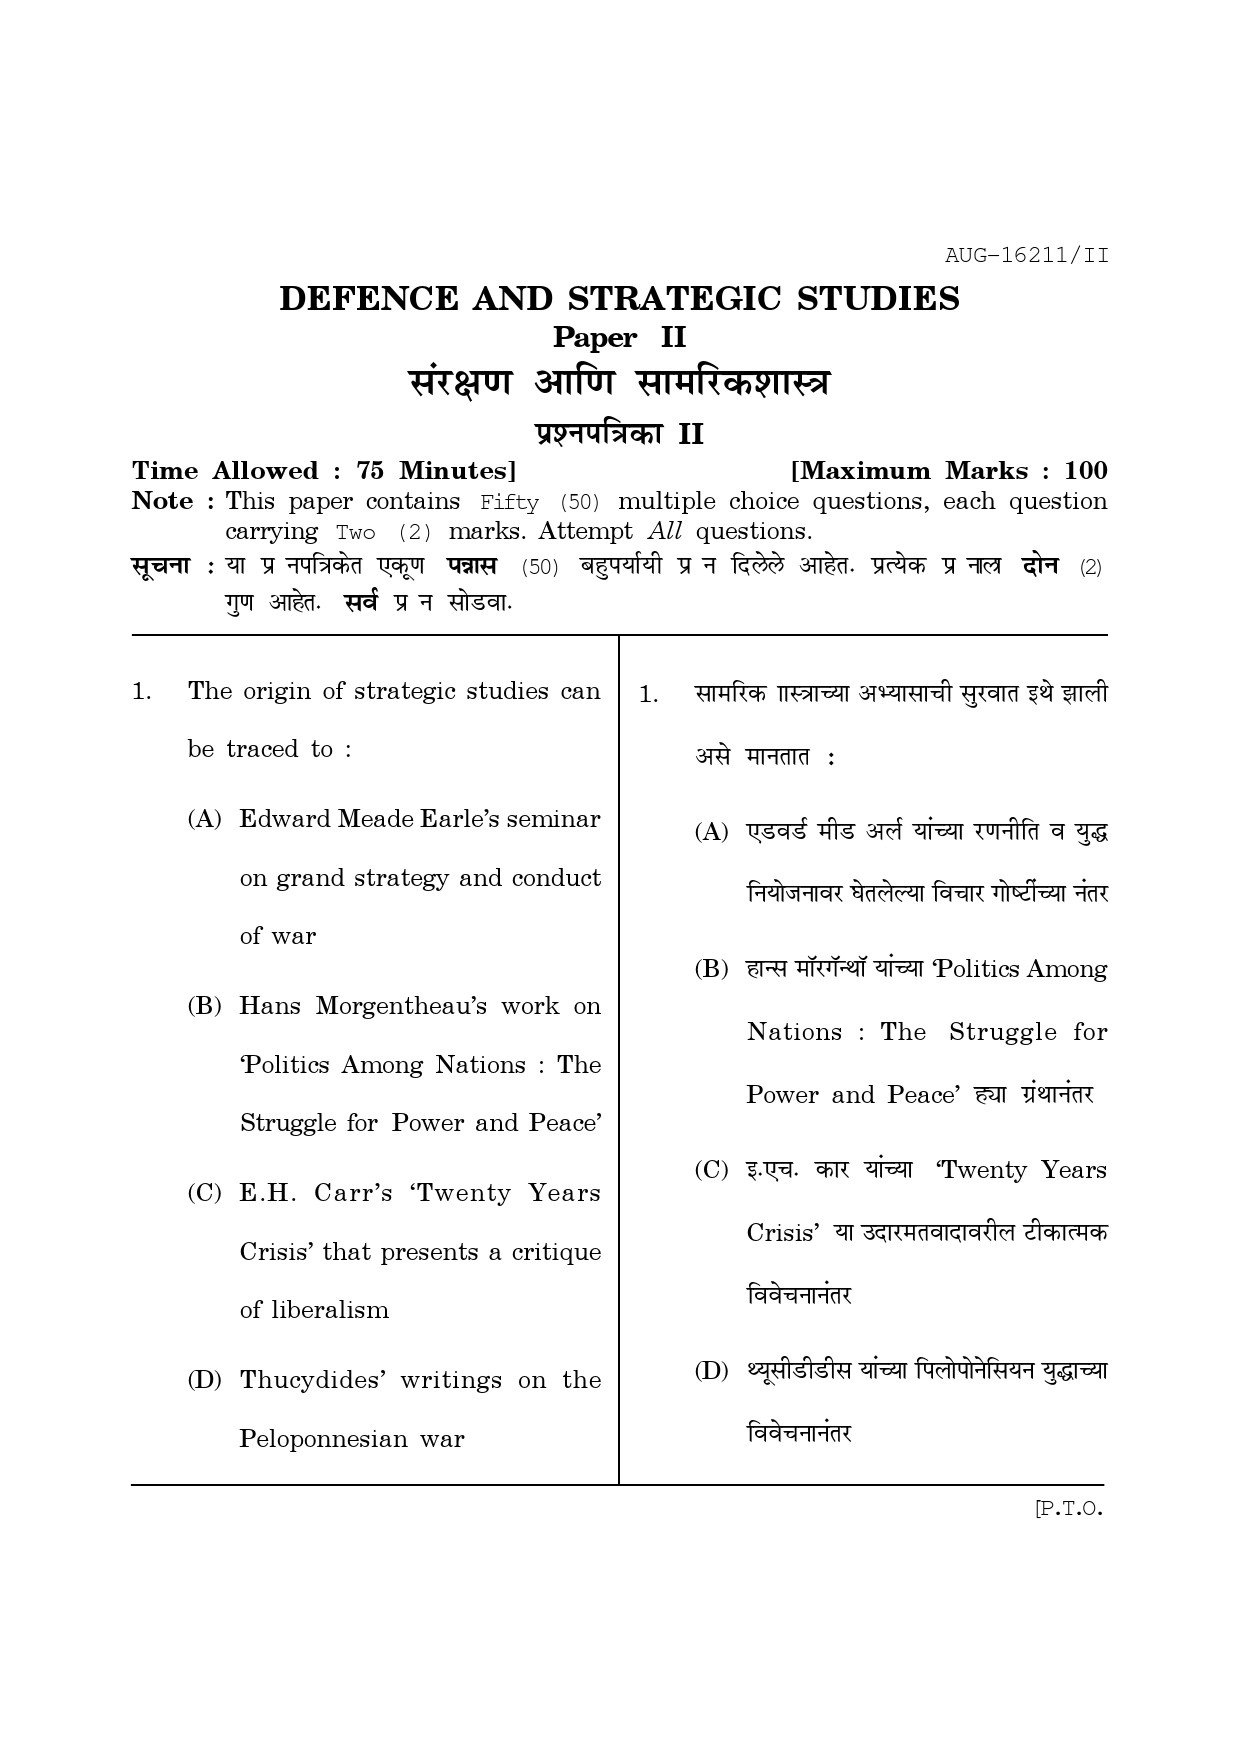 Maharashtra SET Defence and Strategic Studies Question Paper II August 2011 1